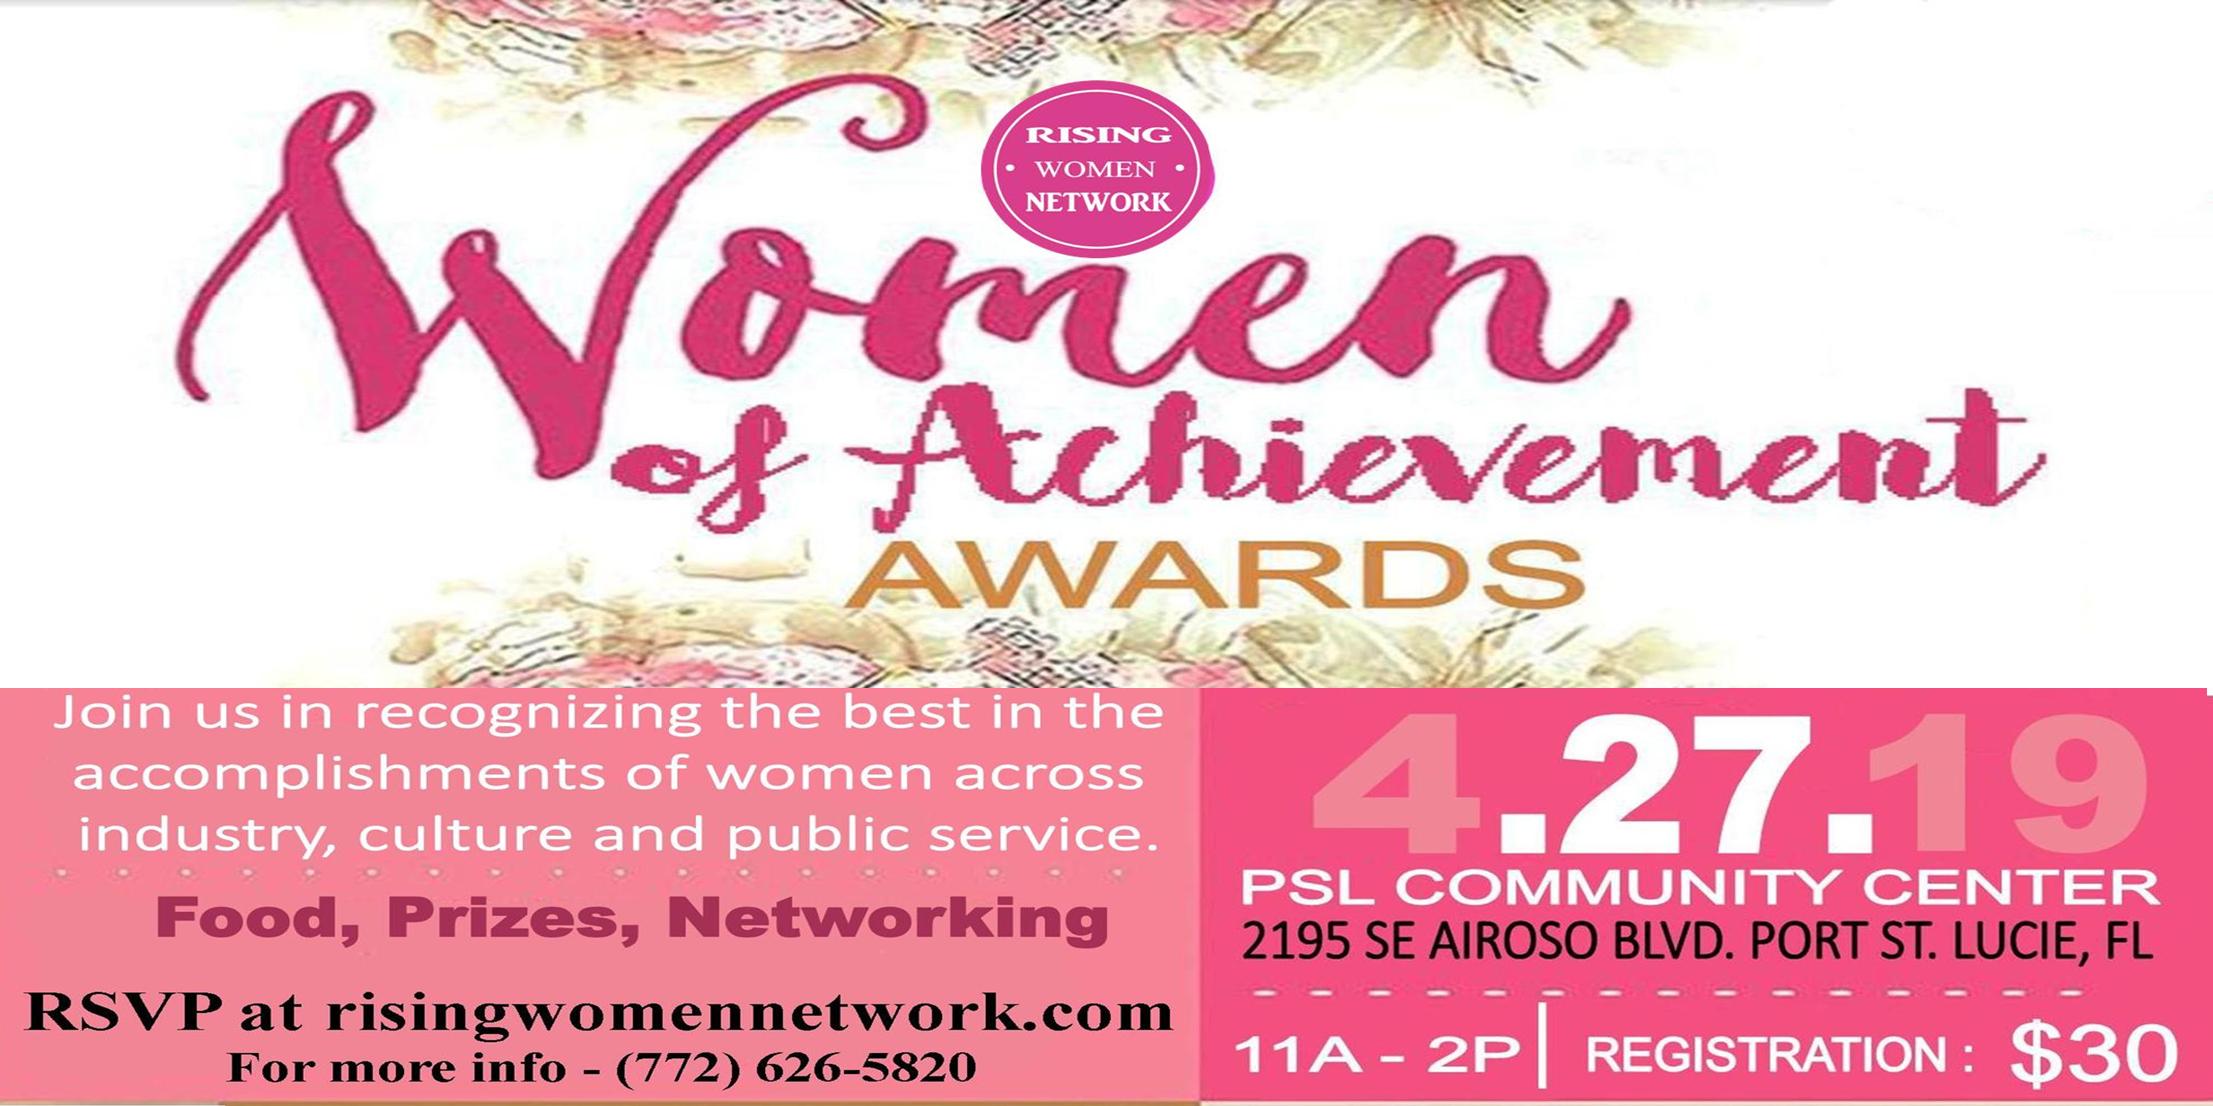 WOMEN OF ACHIEVEMENT AWARDS 2019